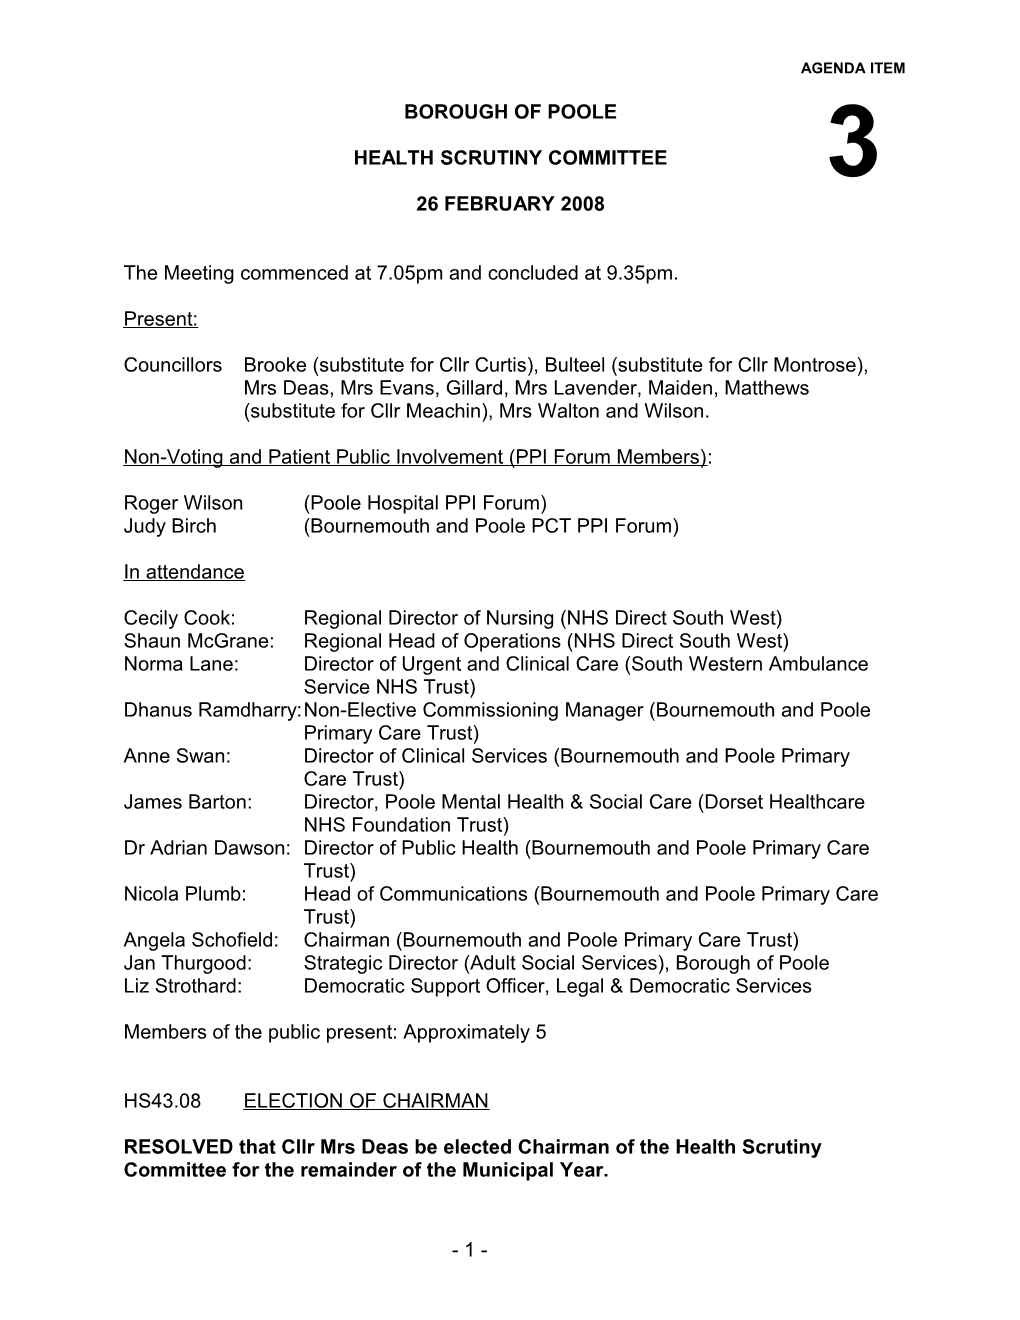 Minutes - Health Scrutiny Committee - 26 February 2008